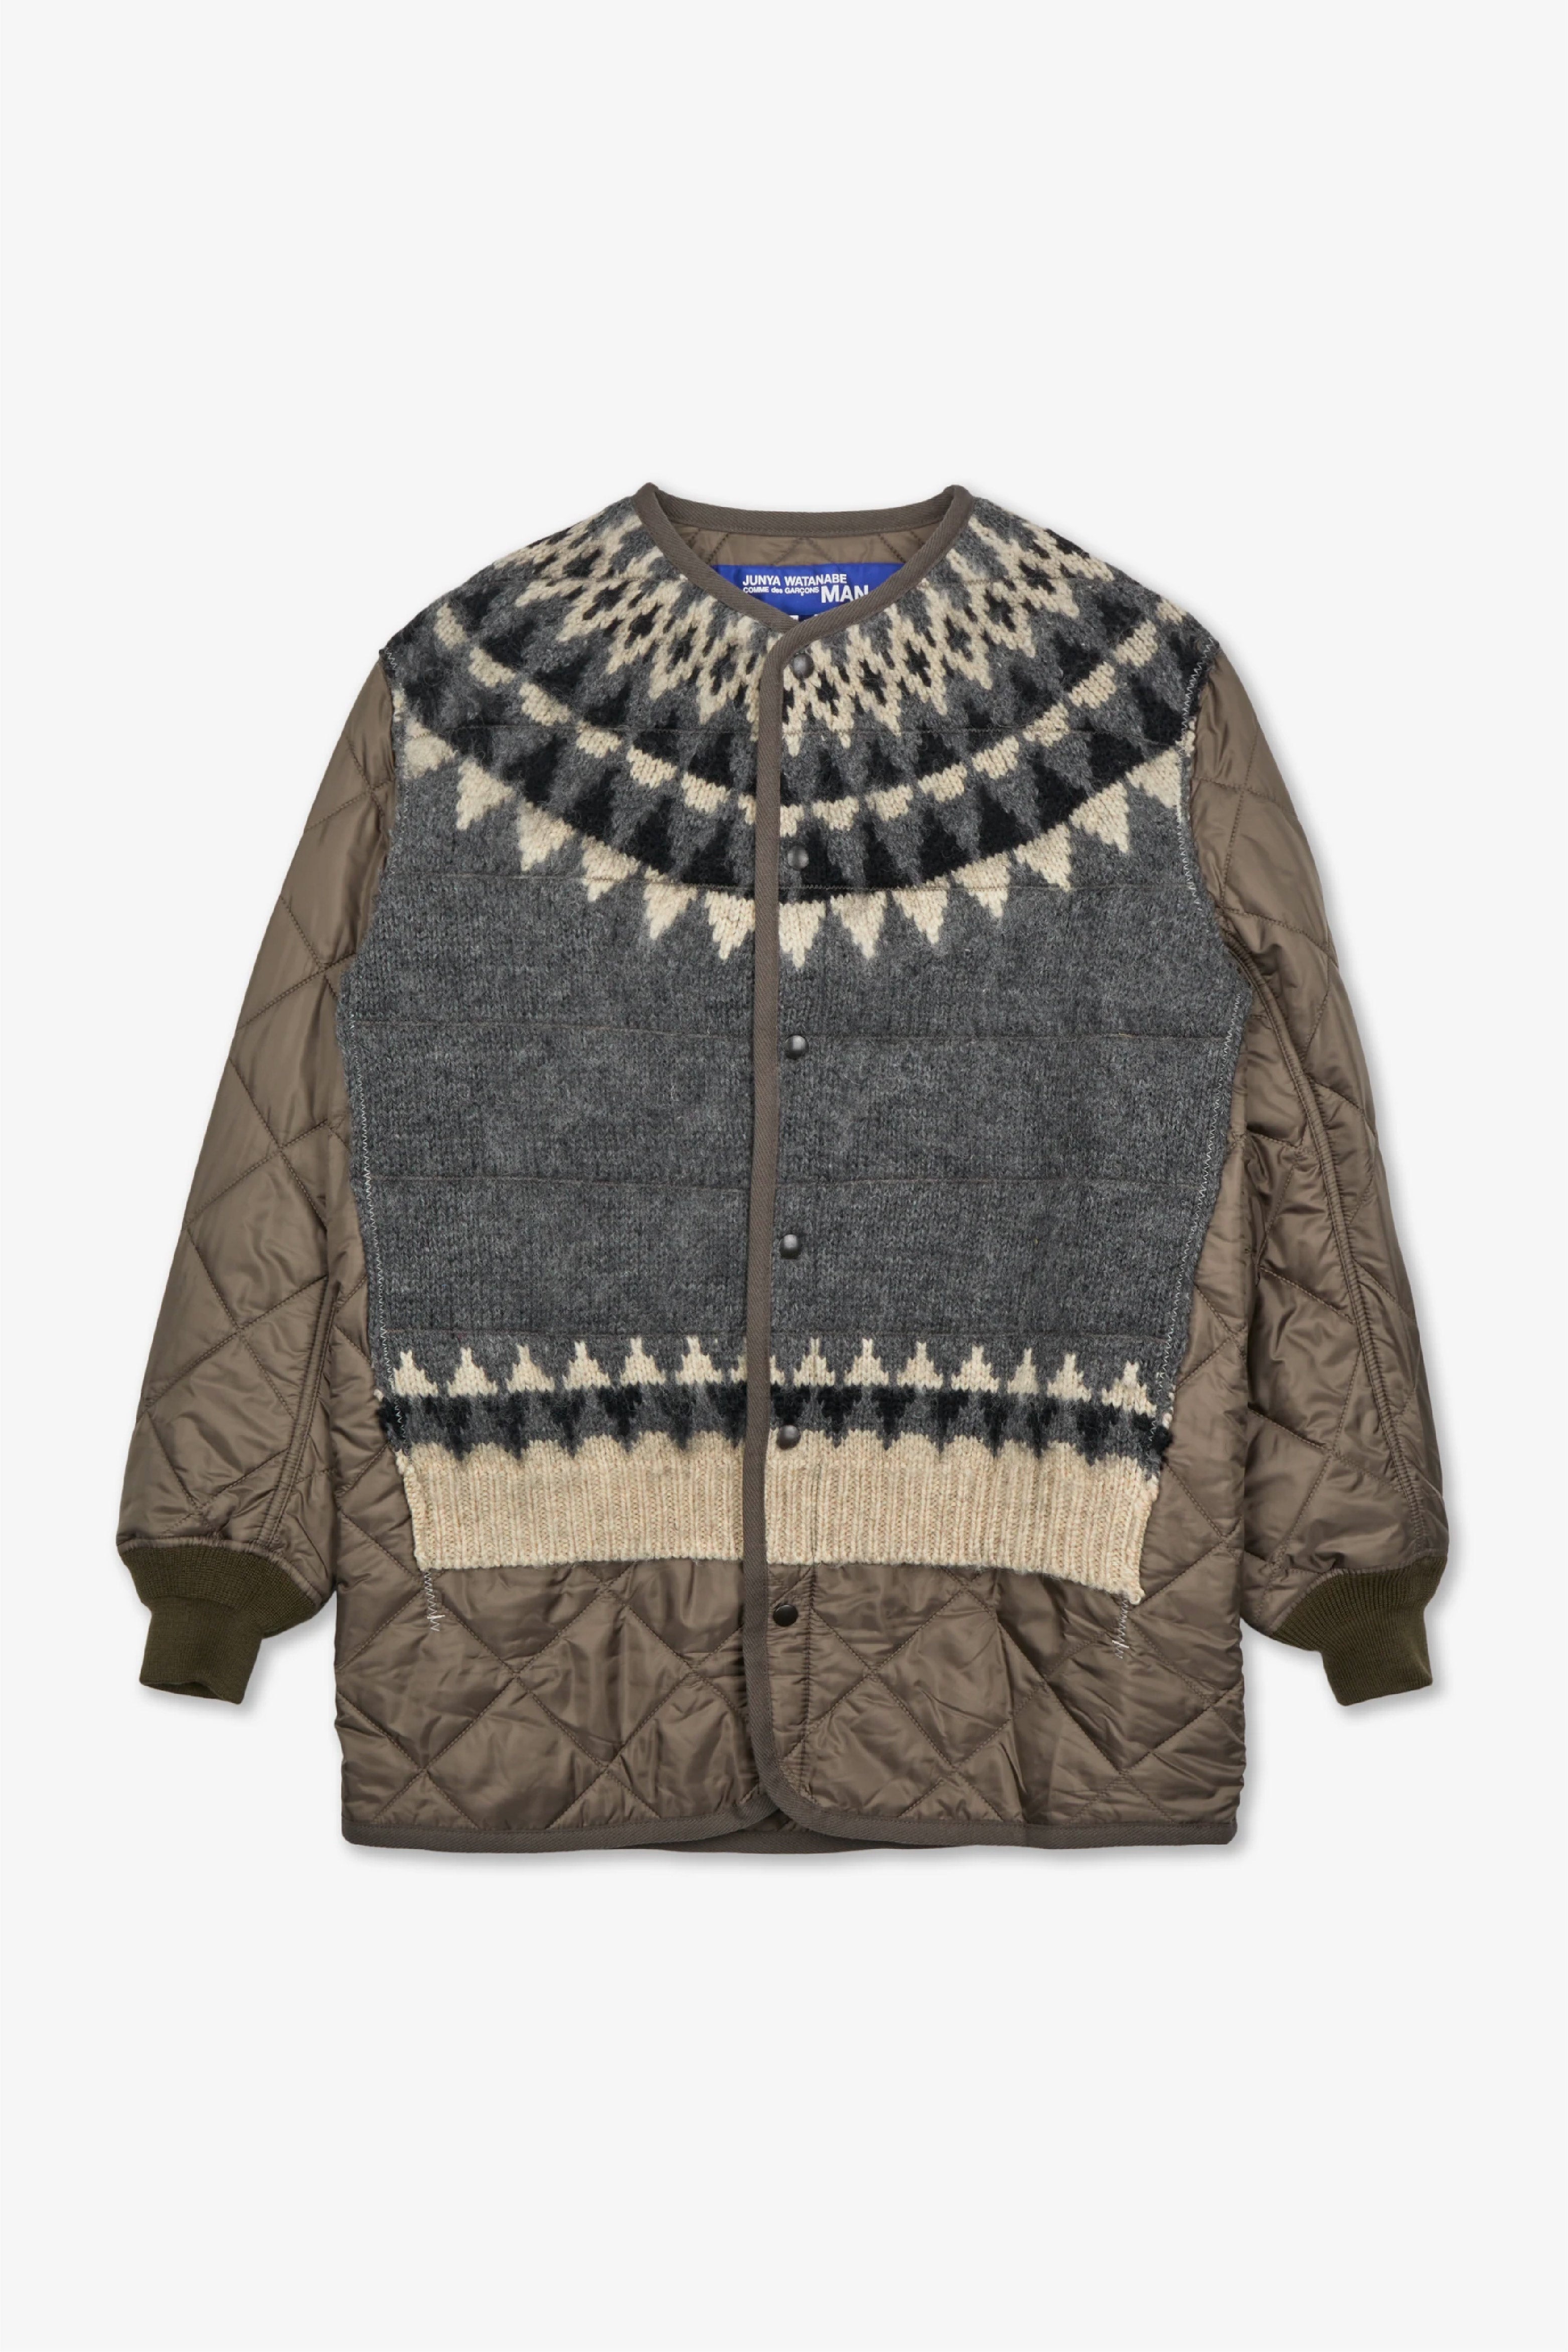 Selectshop FRAME - JUNYA WATANABE MAN Sweater Jacket Outerwear Dubai